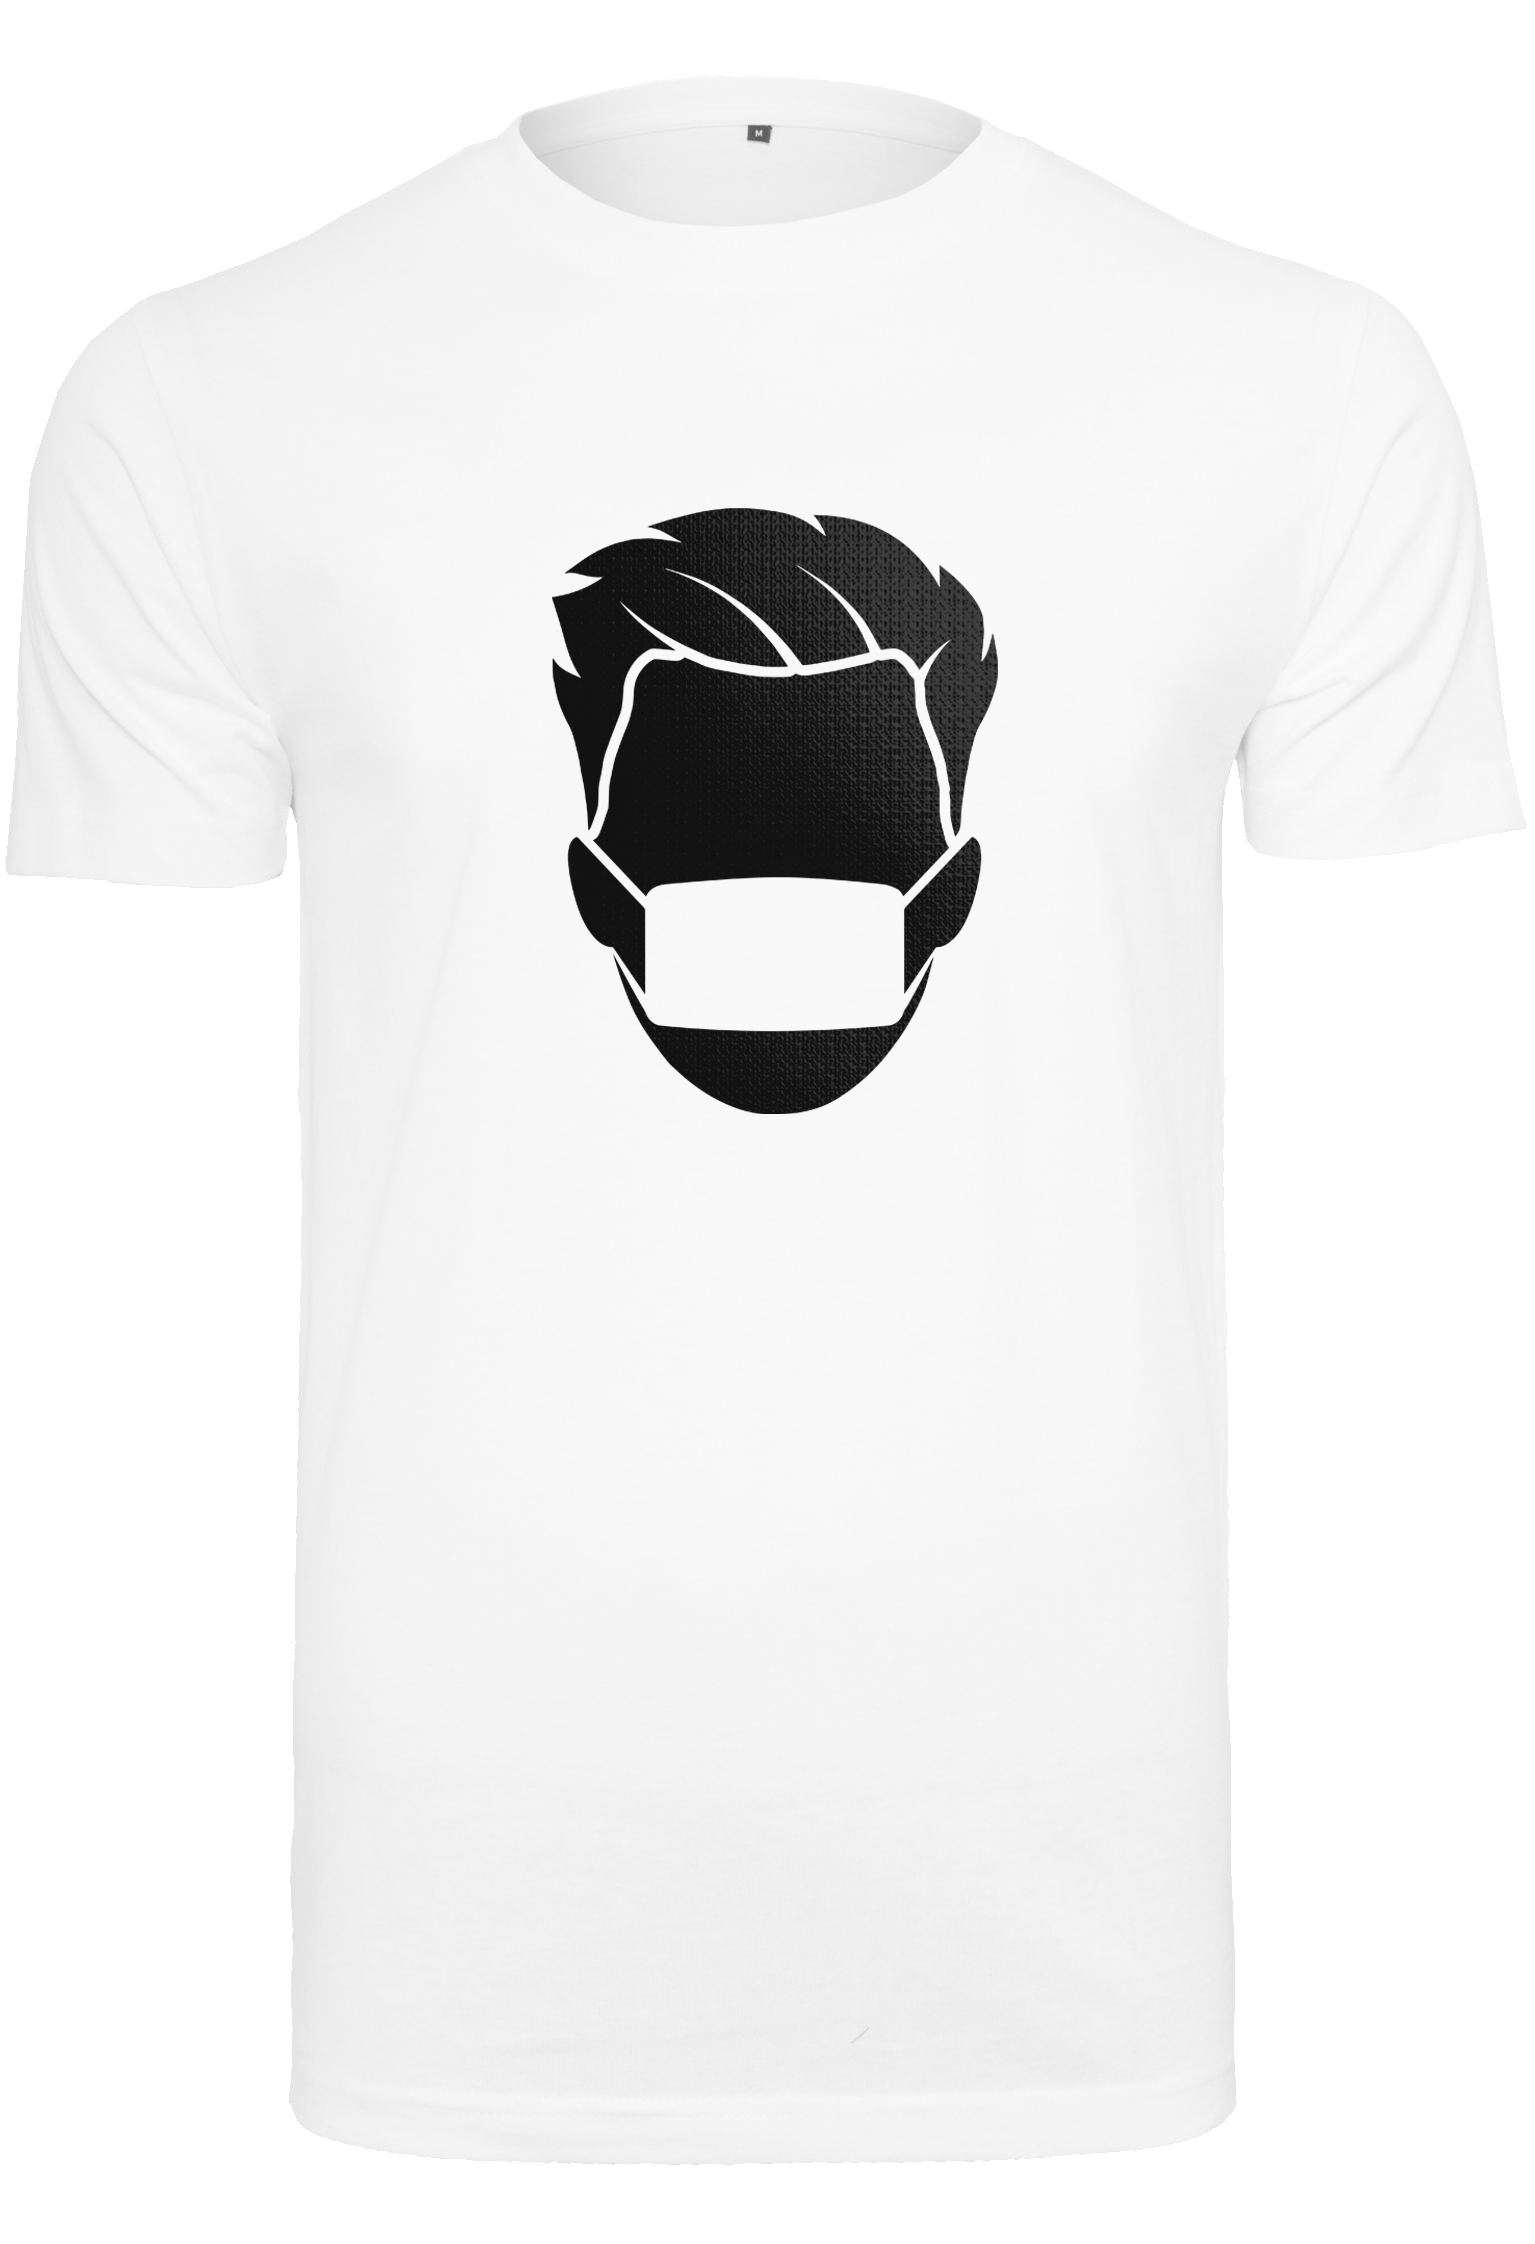 Juggl white T-Shirt